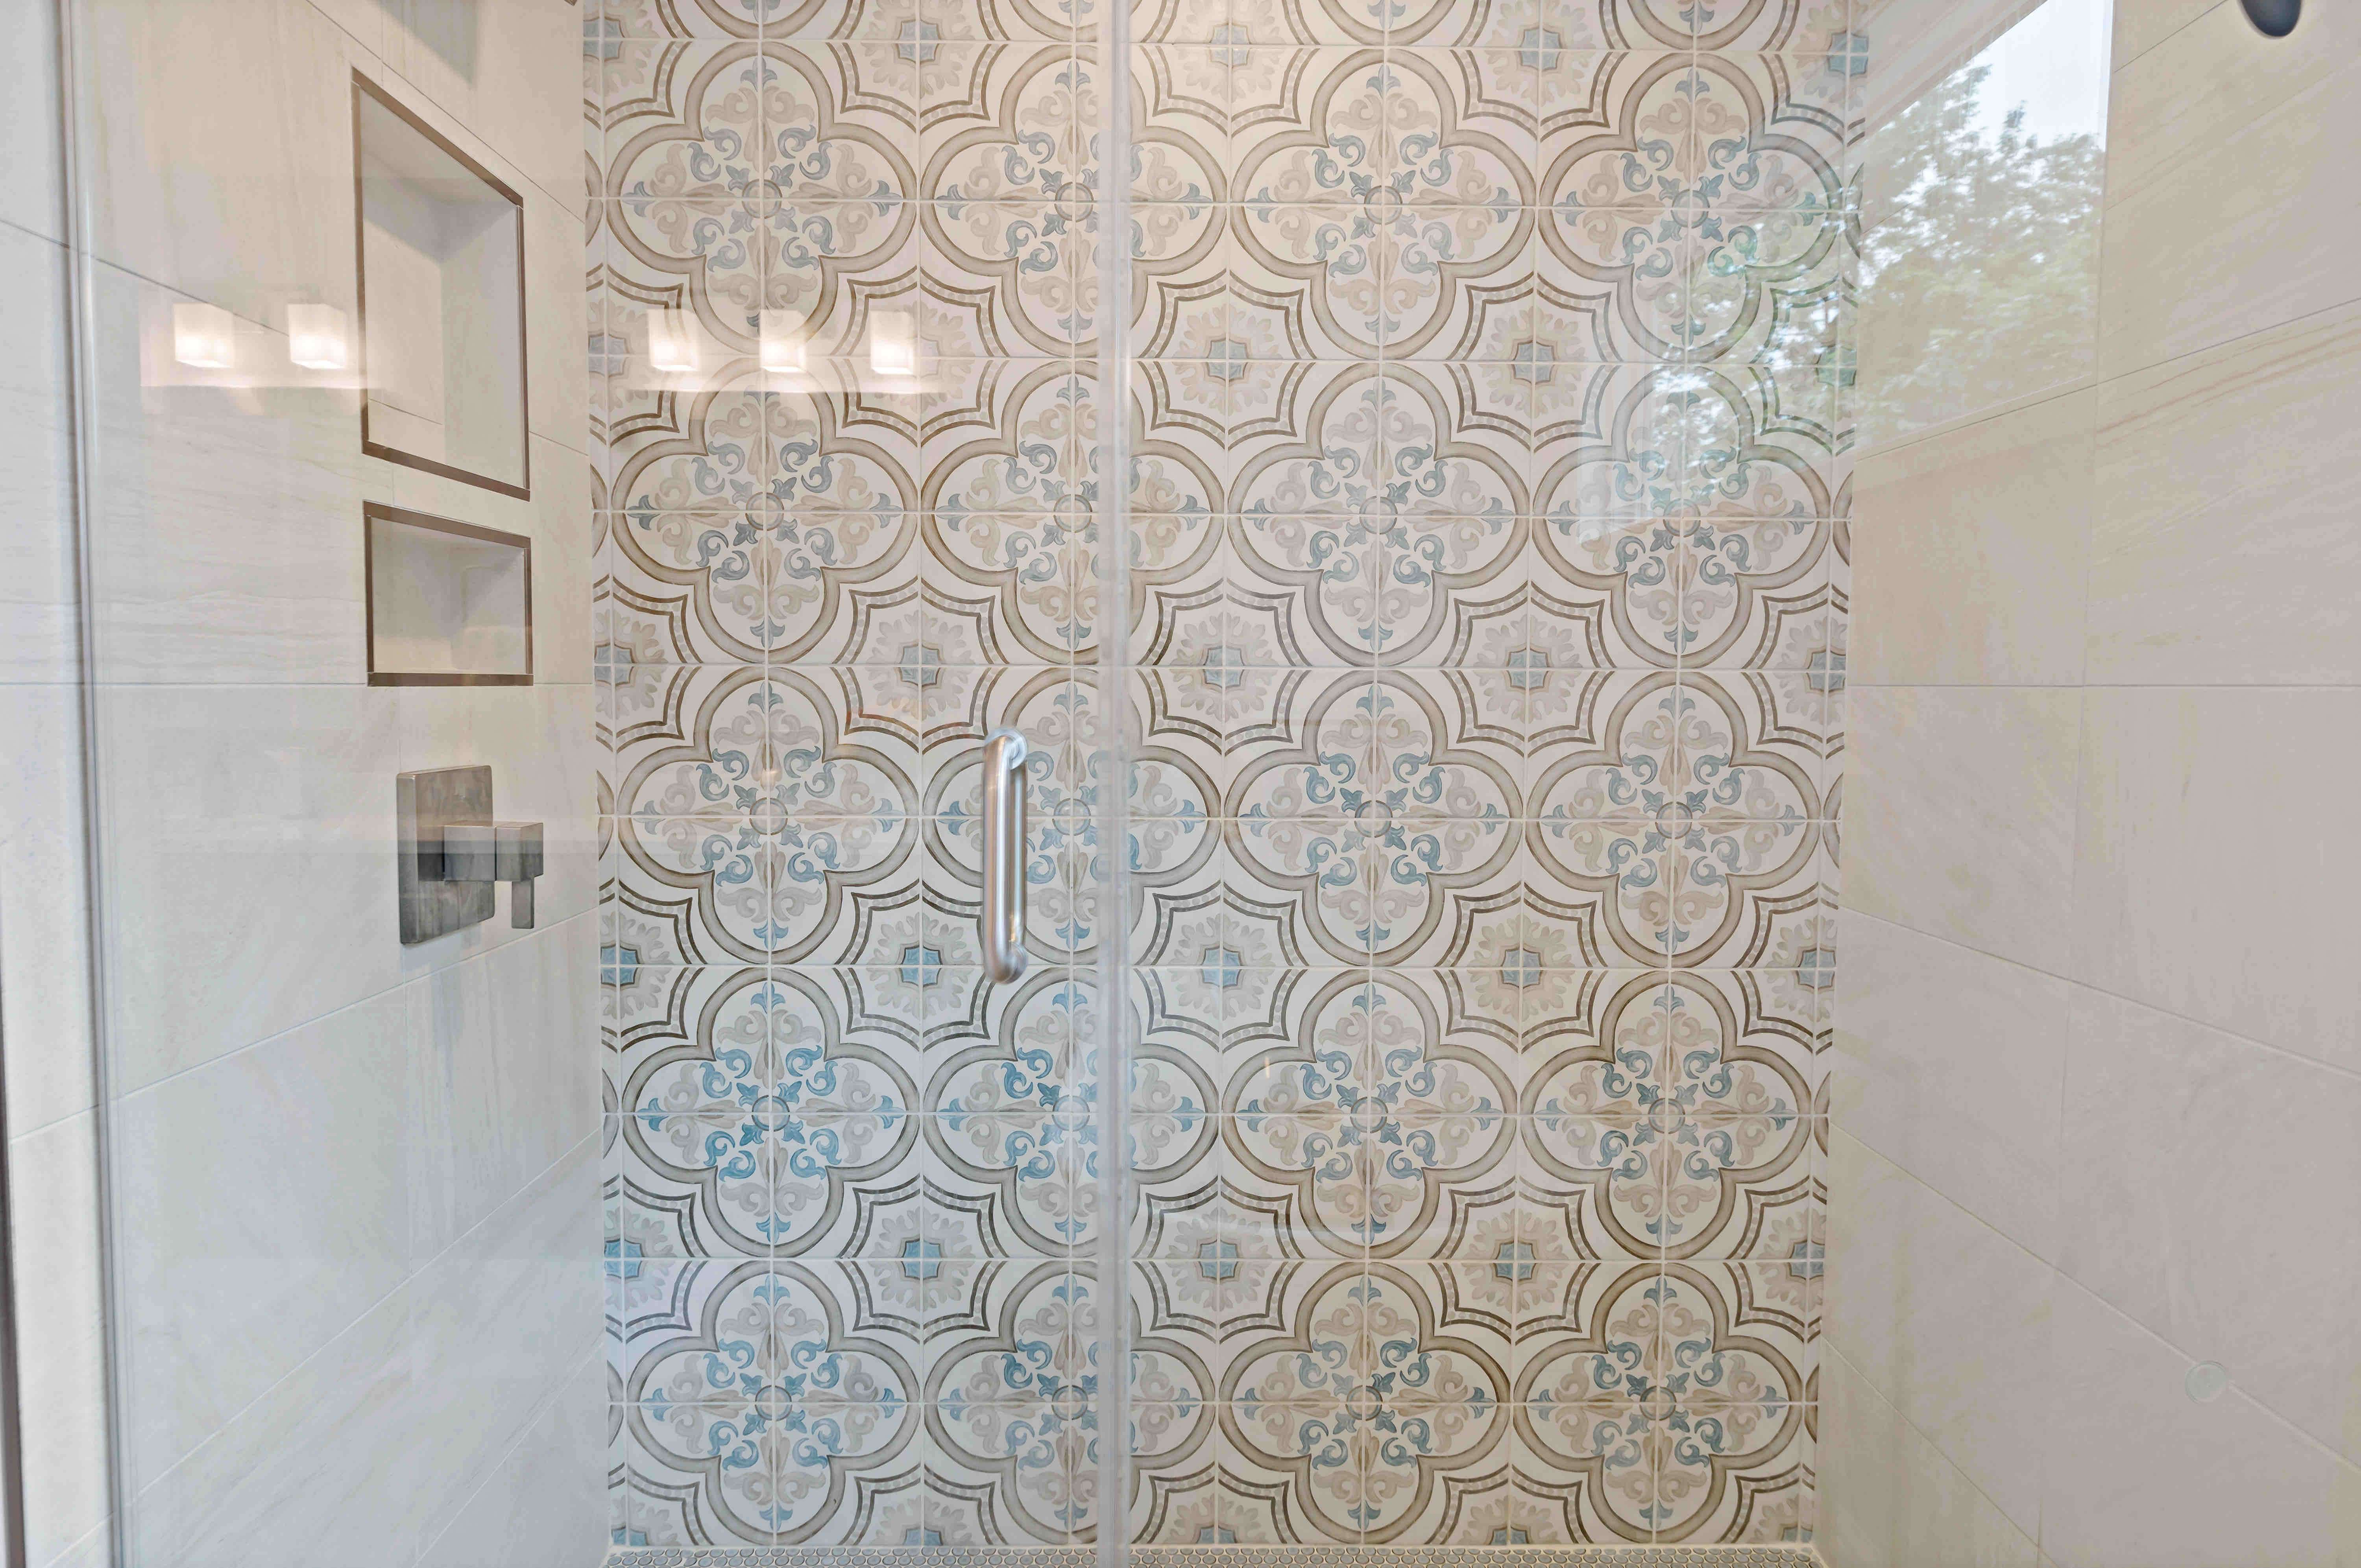 Circular shower tile and glass door